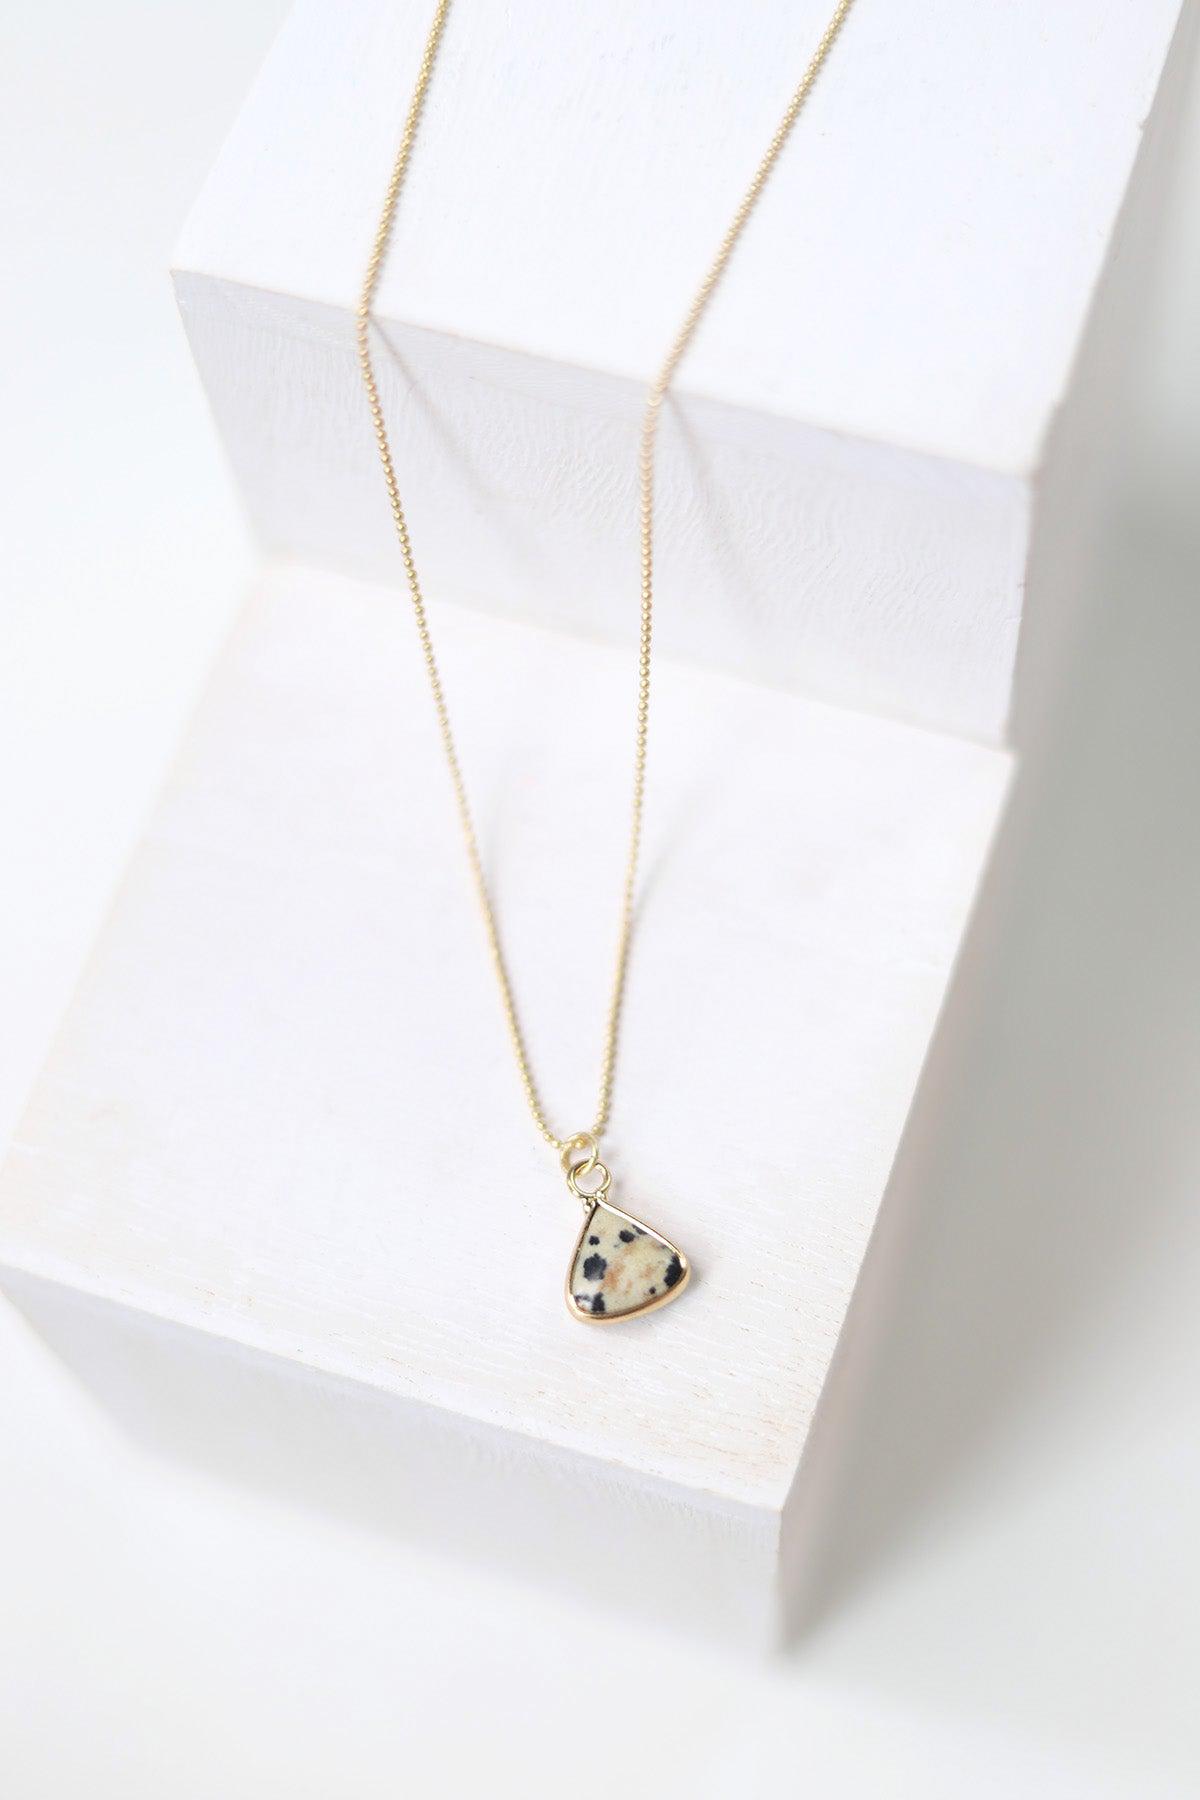 Gold Plated Triangle Gemstone Necklace - Dalmation Jasper